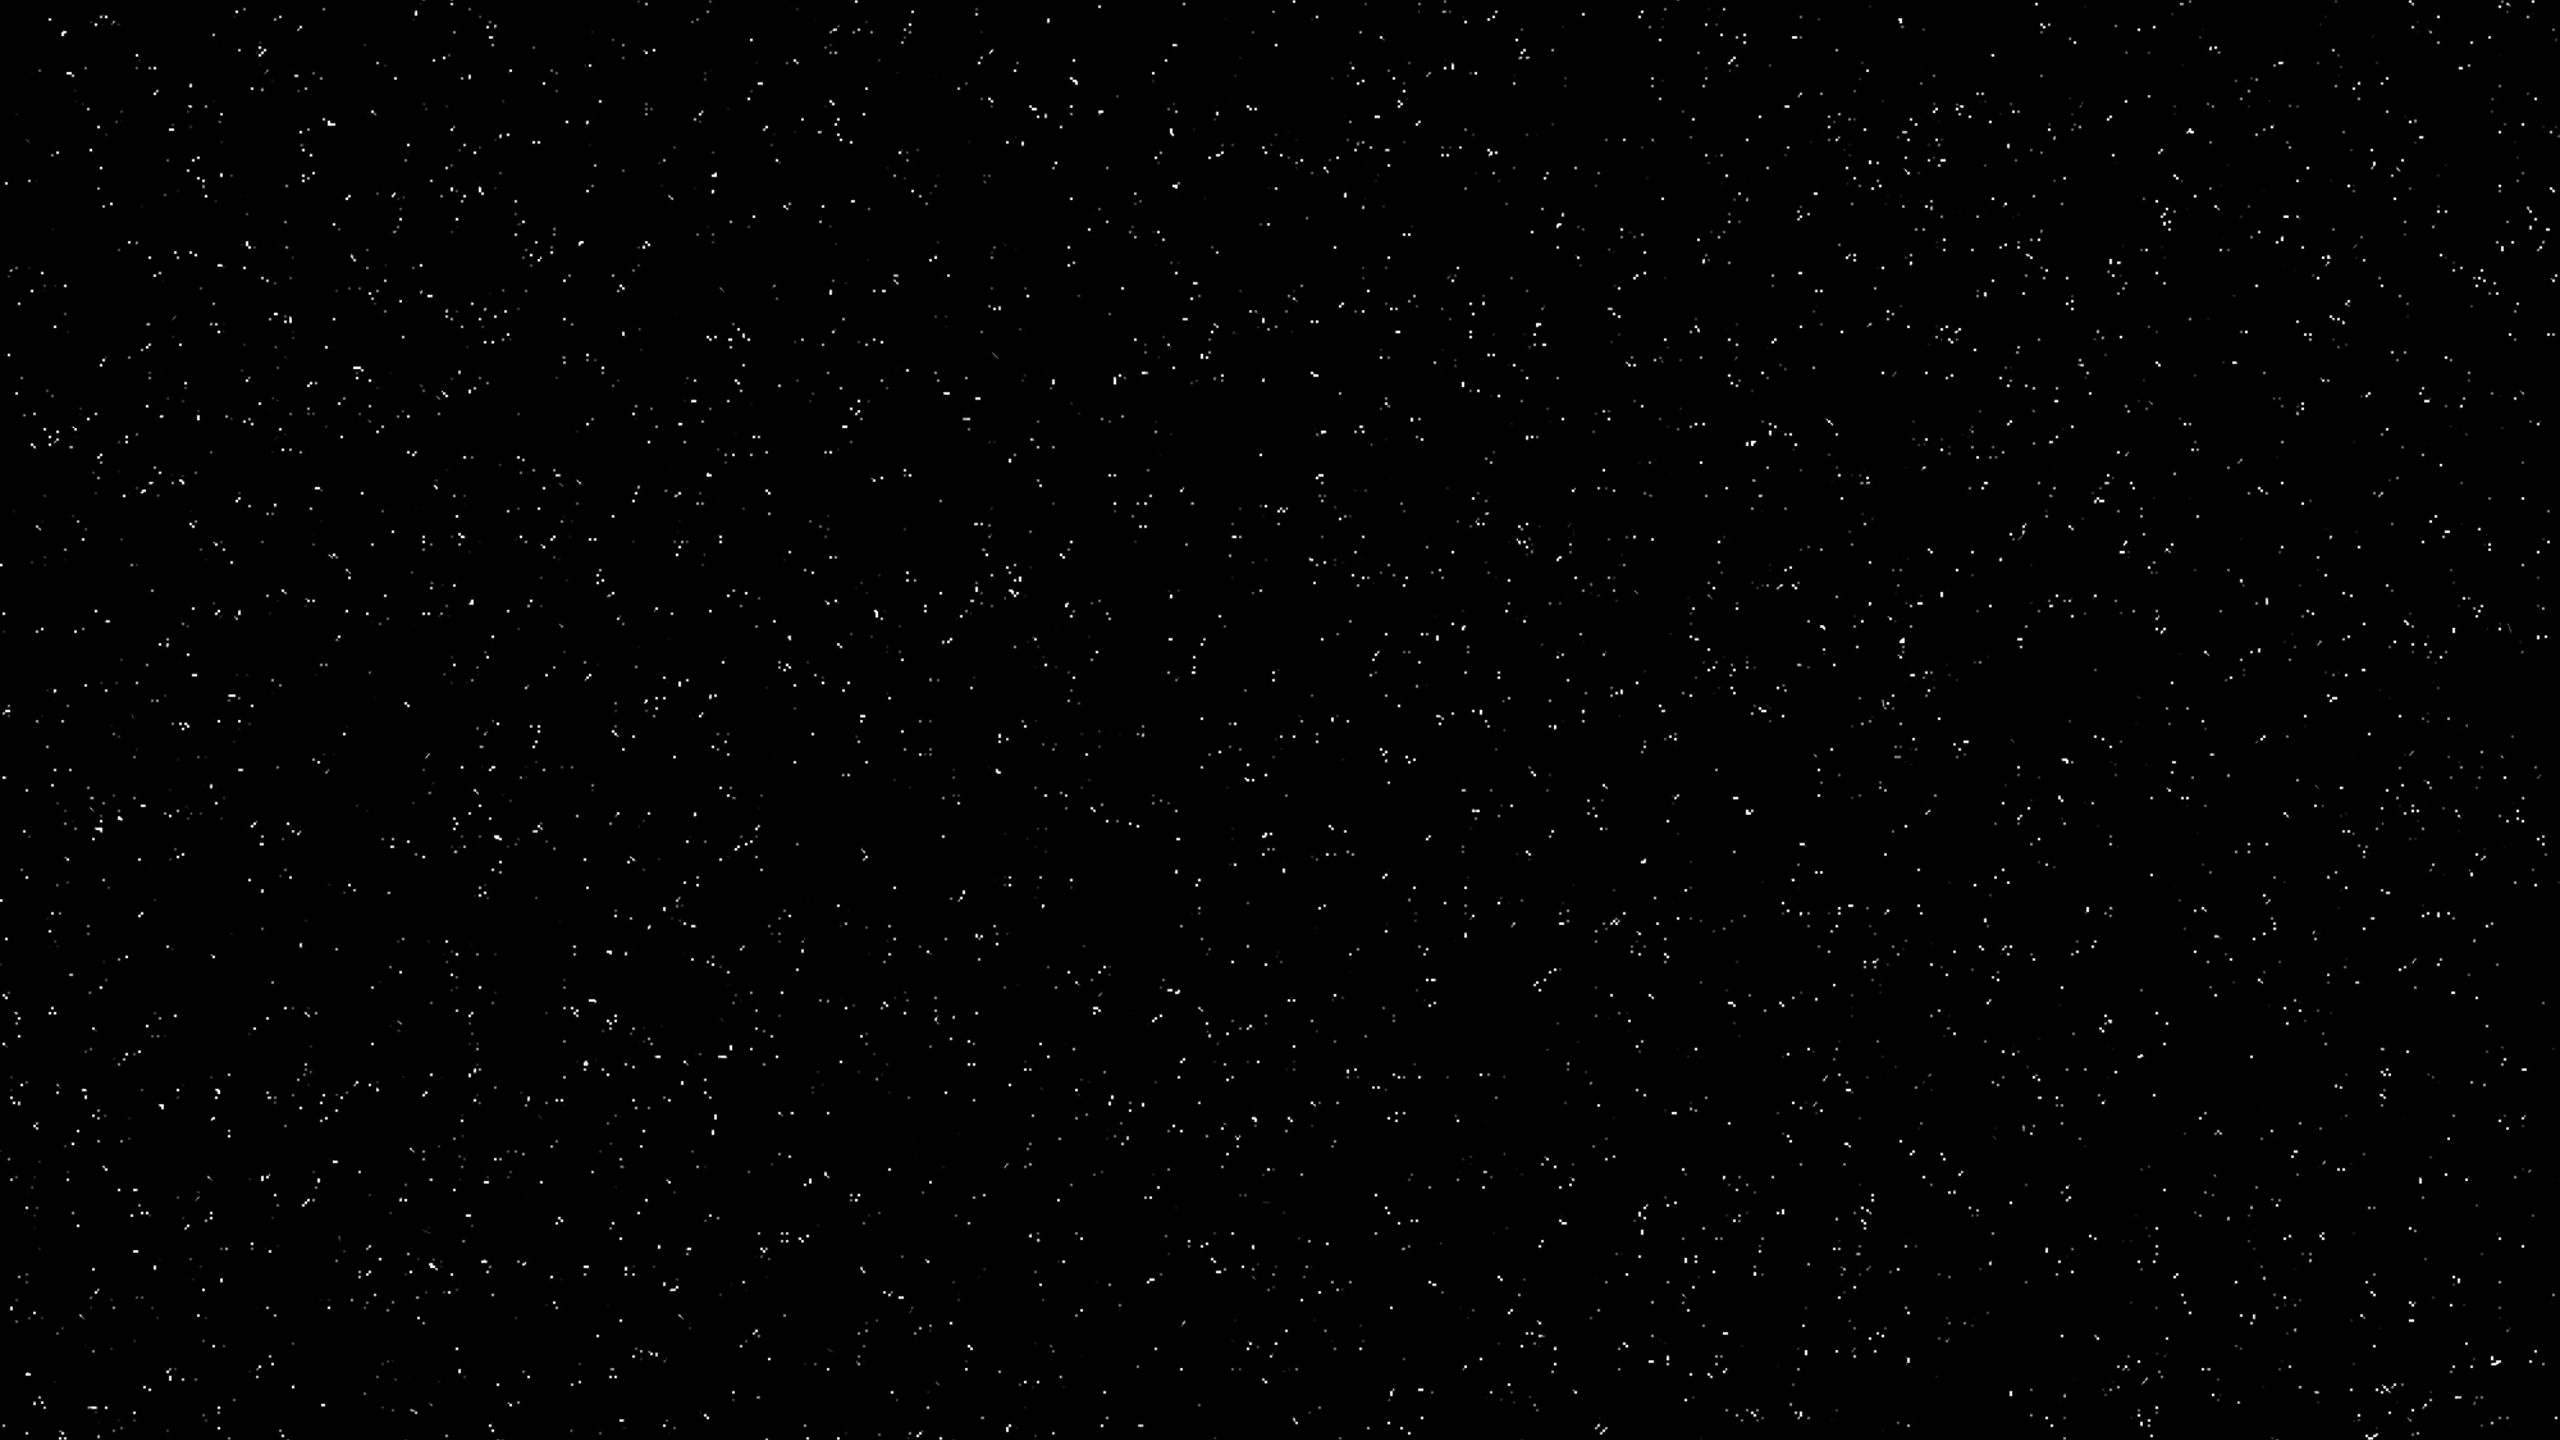 Download wallpaper 2560x1440 stars, space, dark, universe, infinity  widescreen 16:9 hd background